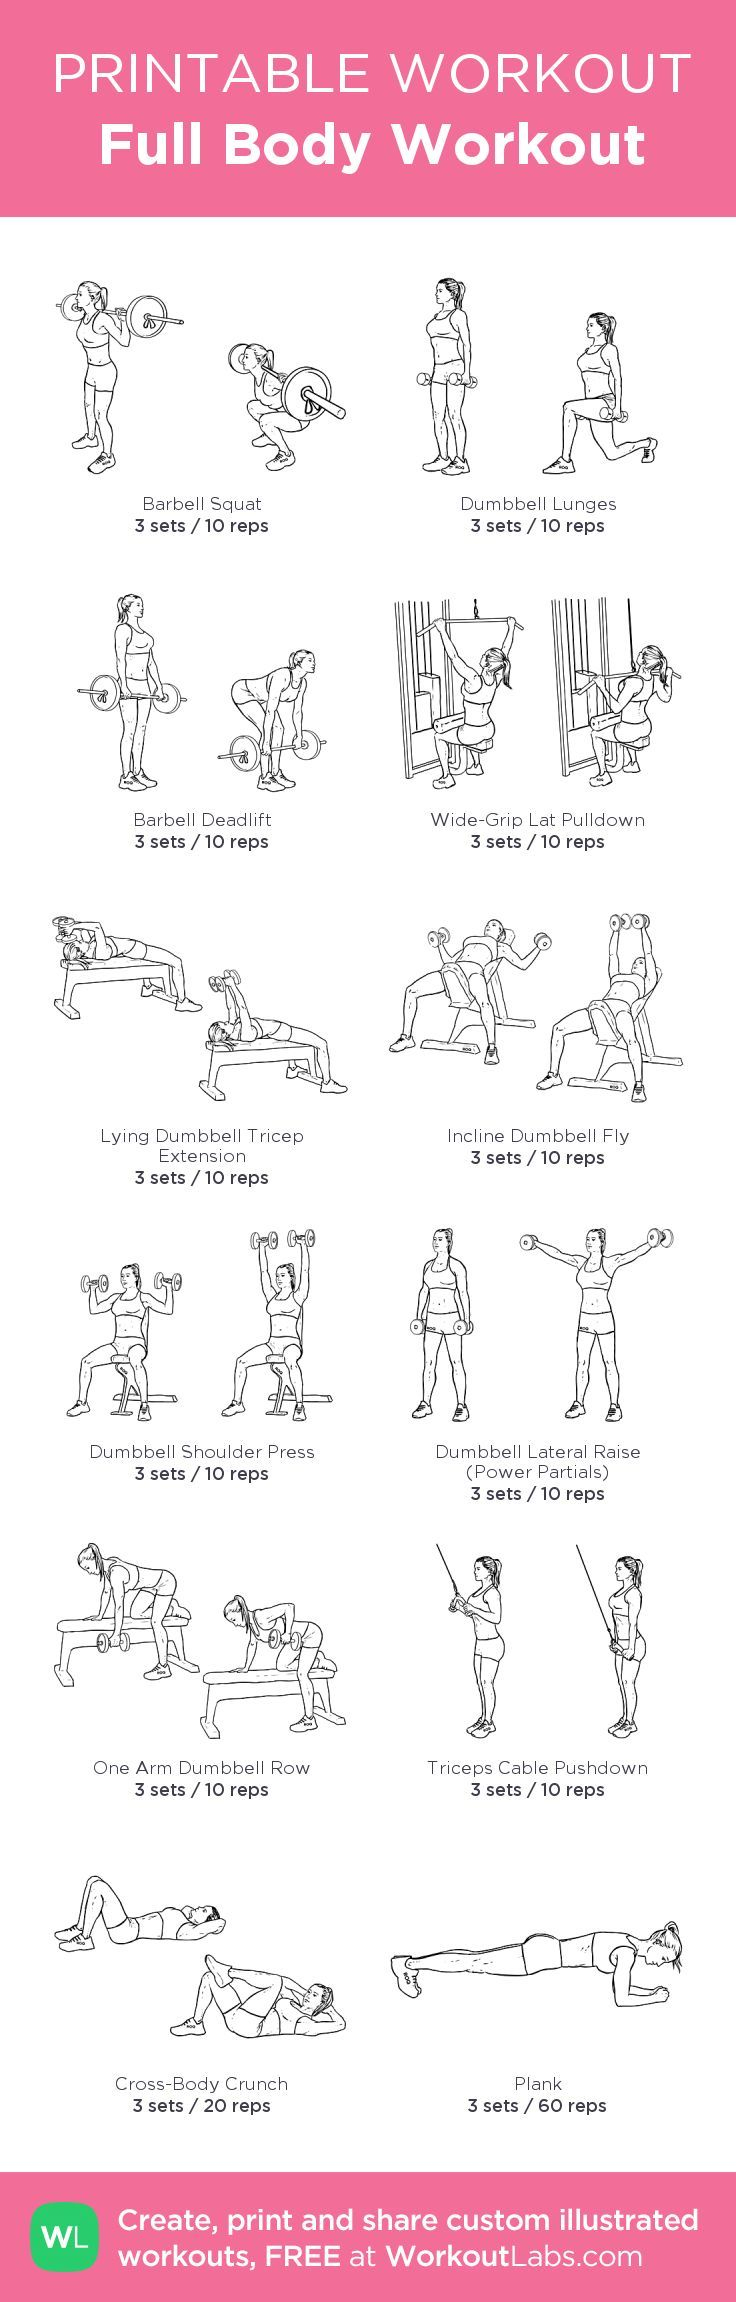 Full Body Workout: My Custom Printable Workout@workoutlabs - Free Printable Gym Workout Routines